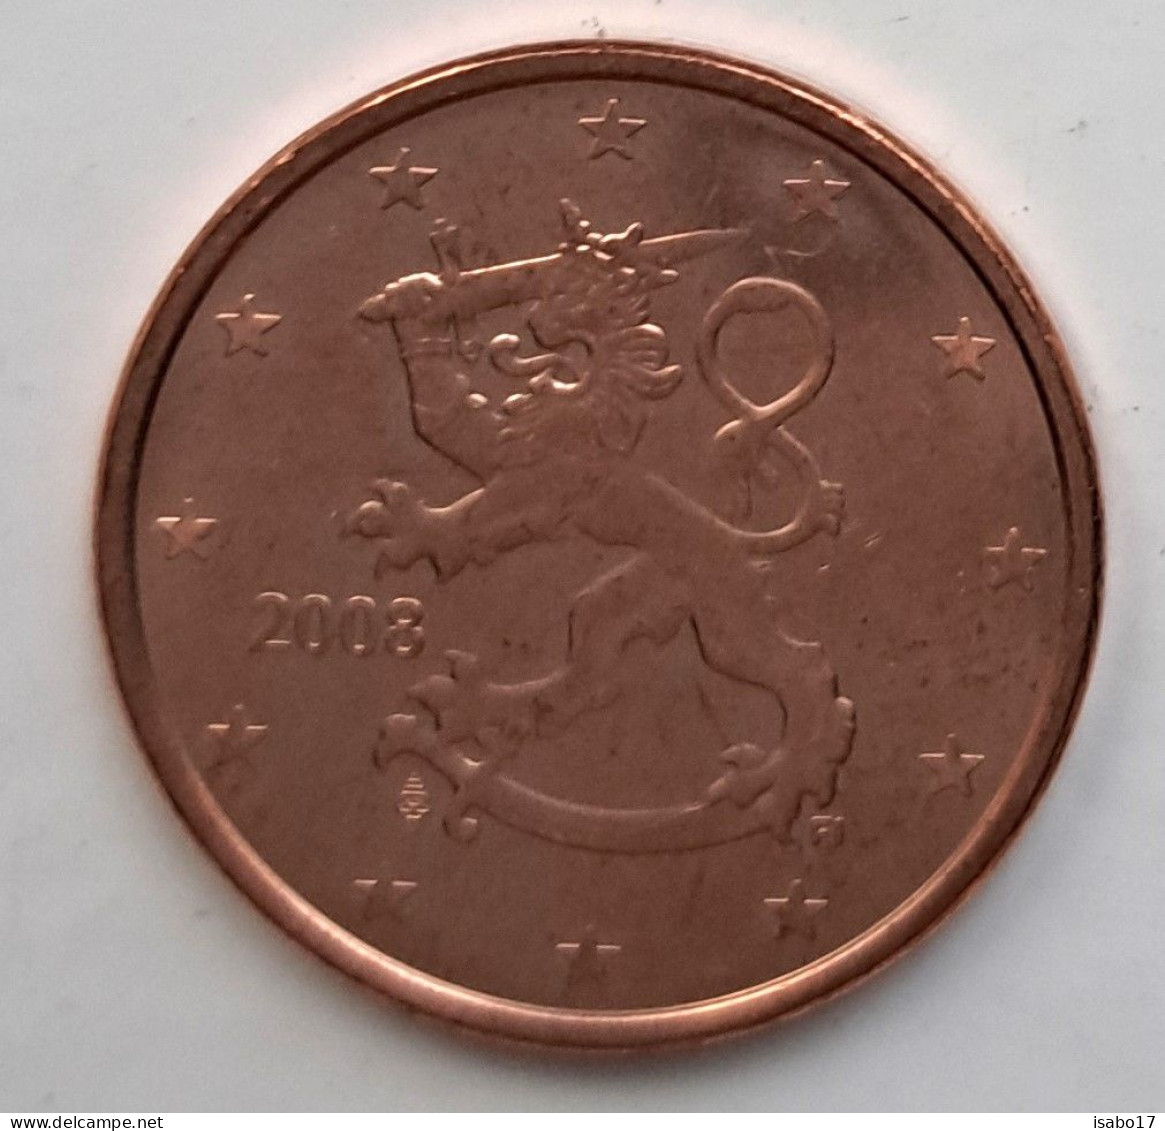 Finnland  5 Cent Münze 2008 - - Finlandia